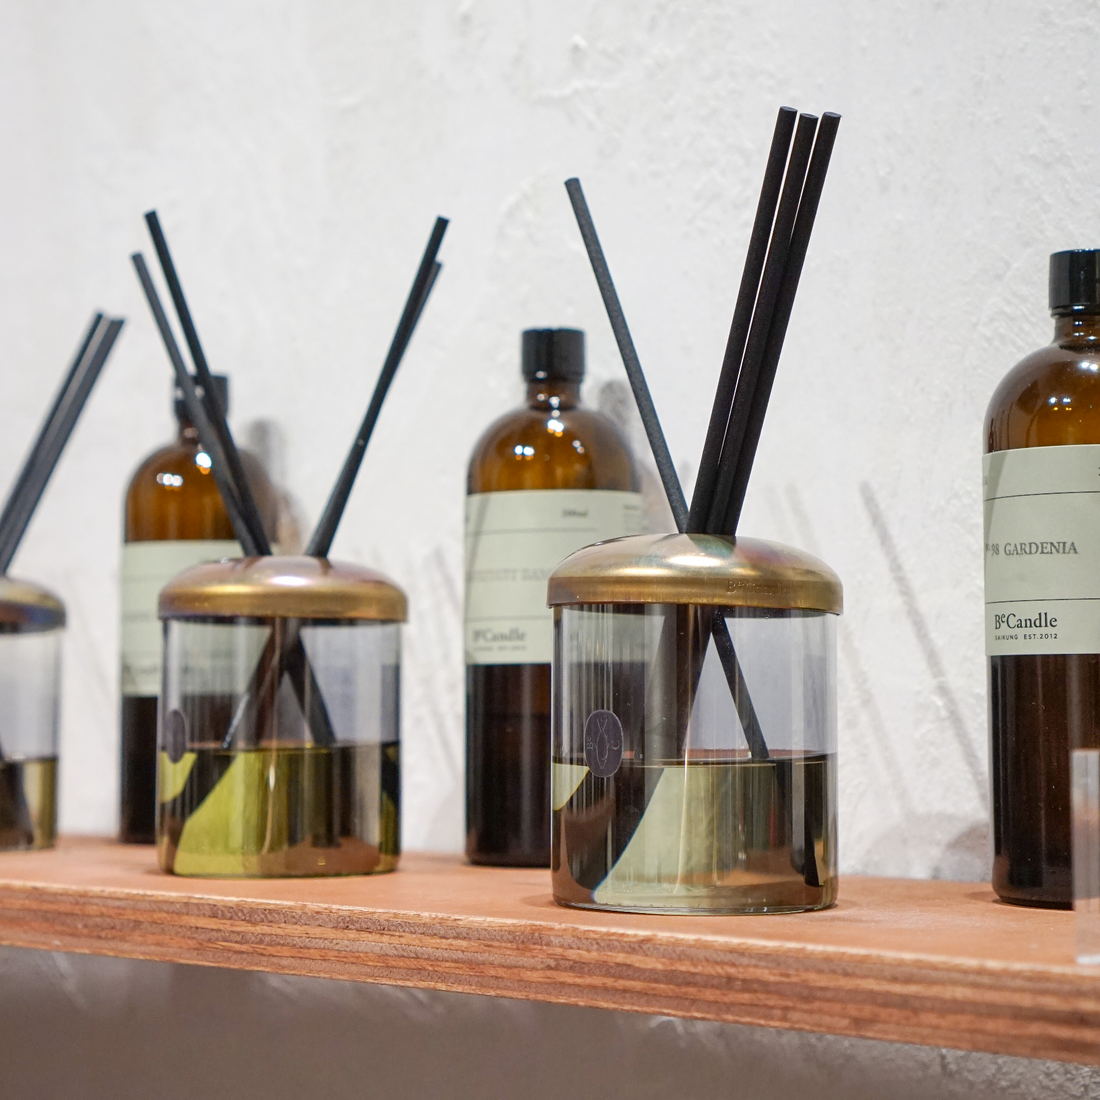 becandle-madeinhk-diffuser-fragrance-grapefruit-bamboo-200ml-display